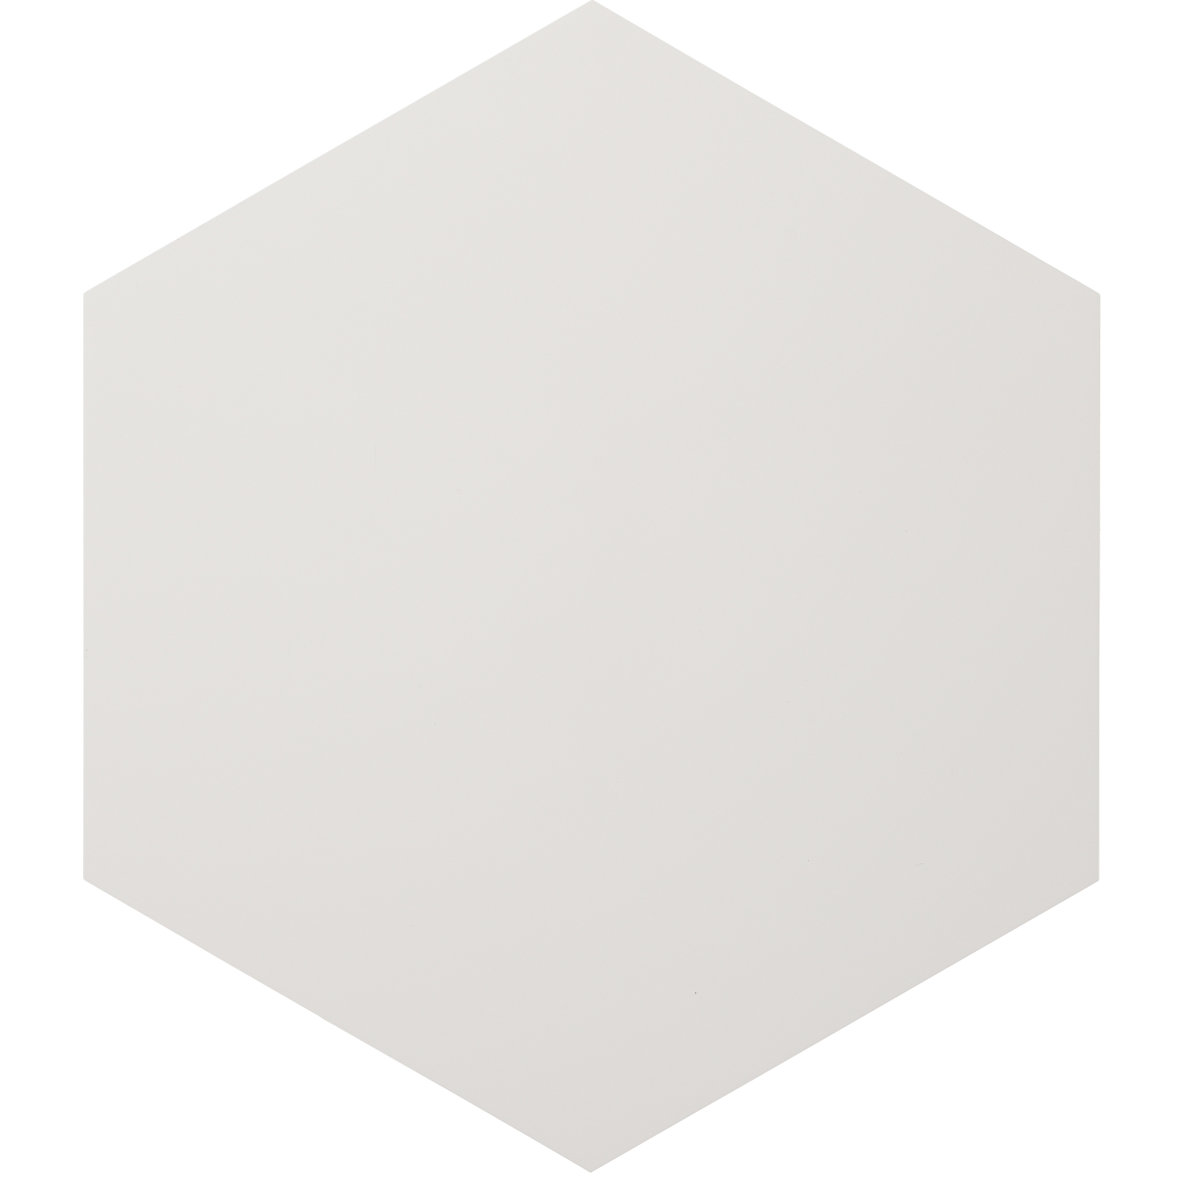 Dizajnerska bijela ploča – Chameleon